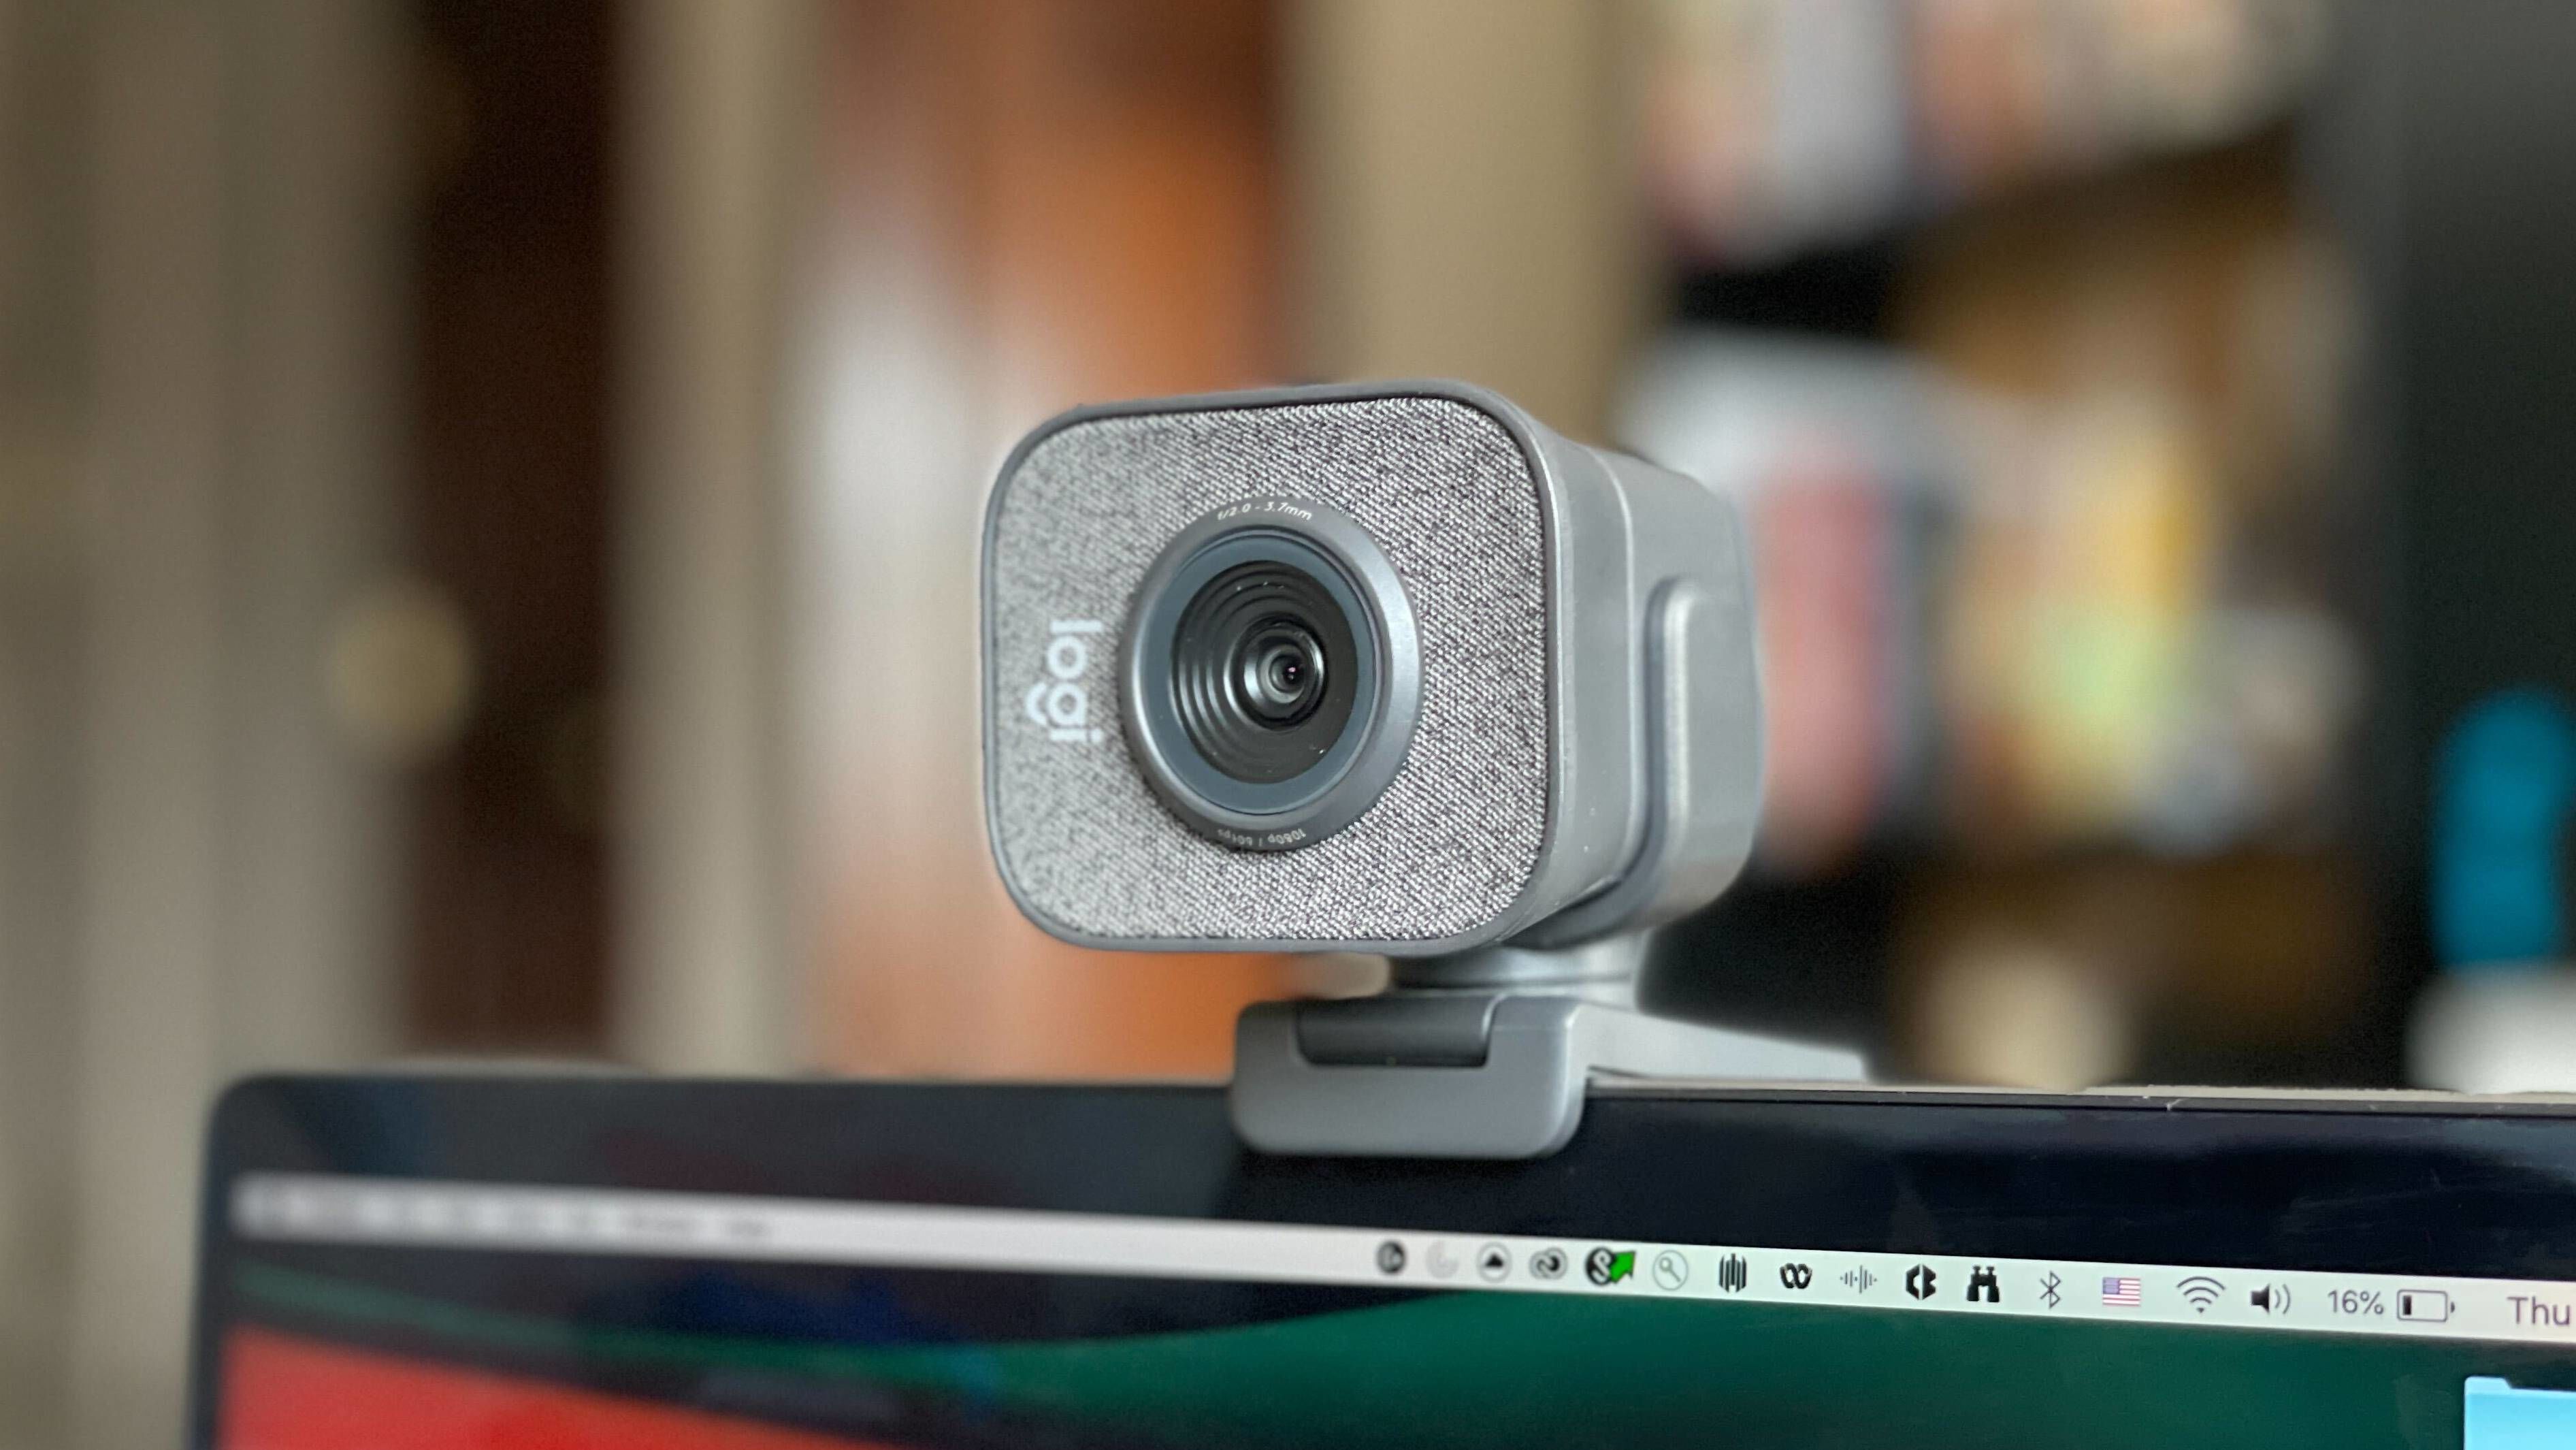 An Honest Logitech HD Pro C920 Webcam Review - Is It Worth the Price?